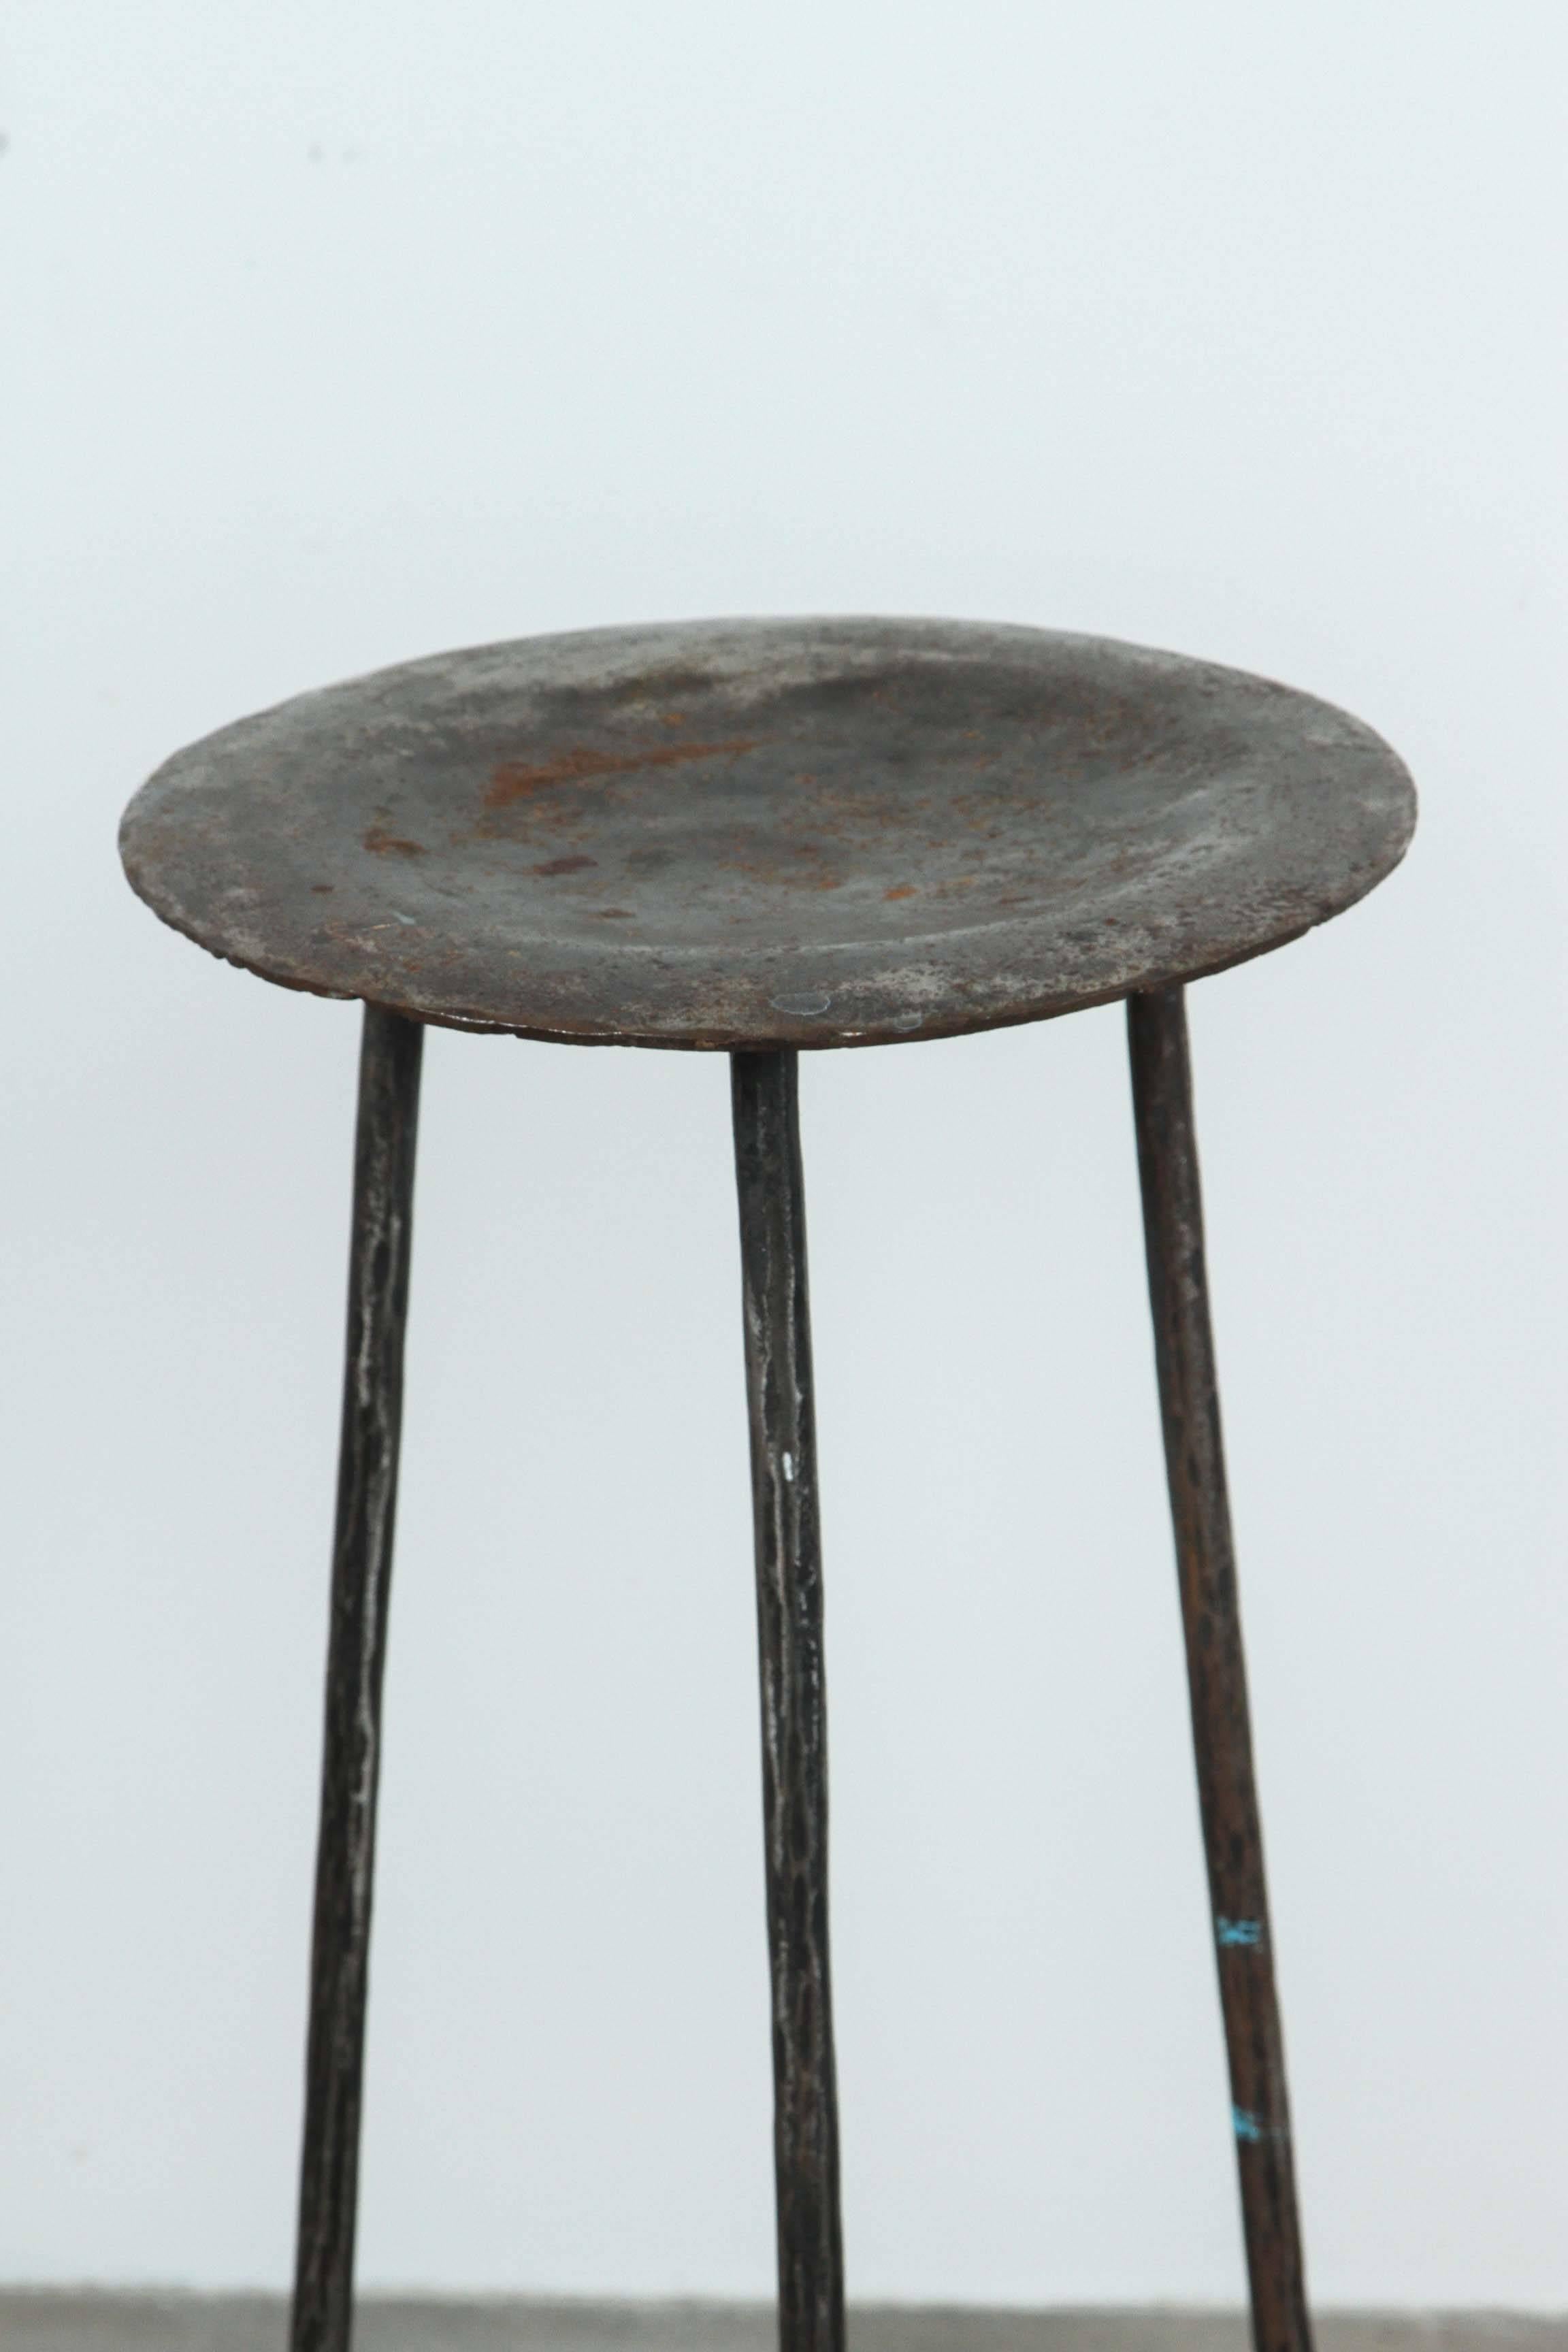 Three-legged tall slender iron stool.